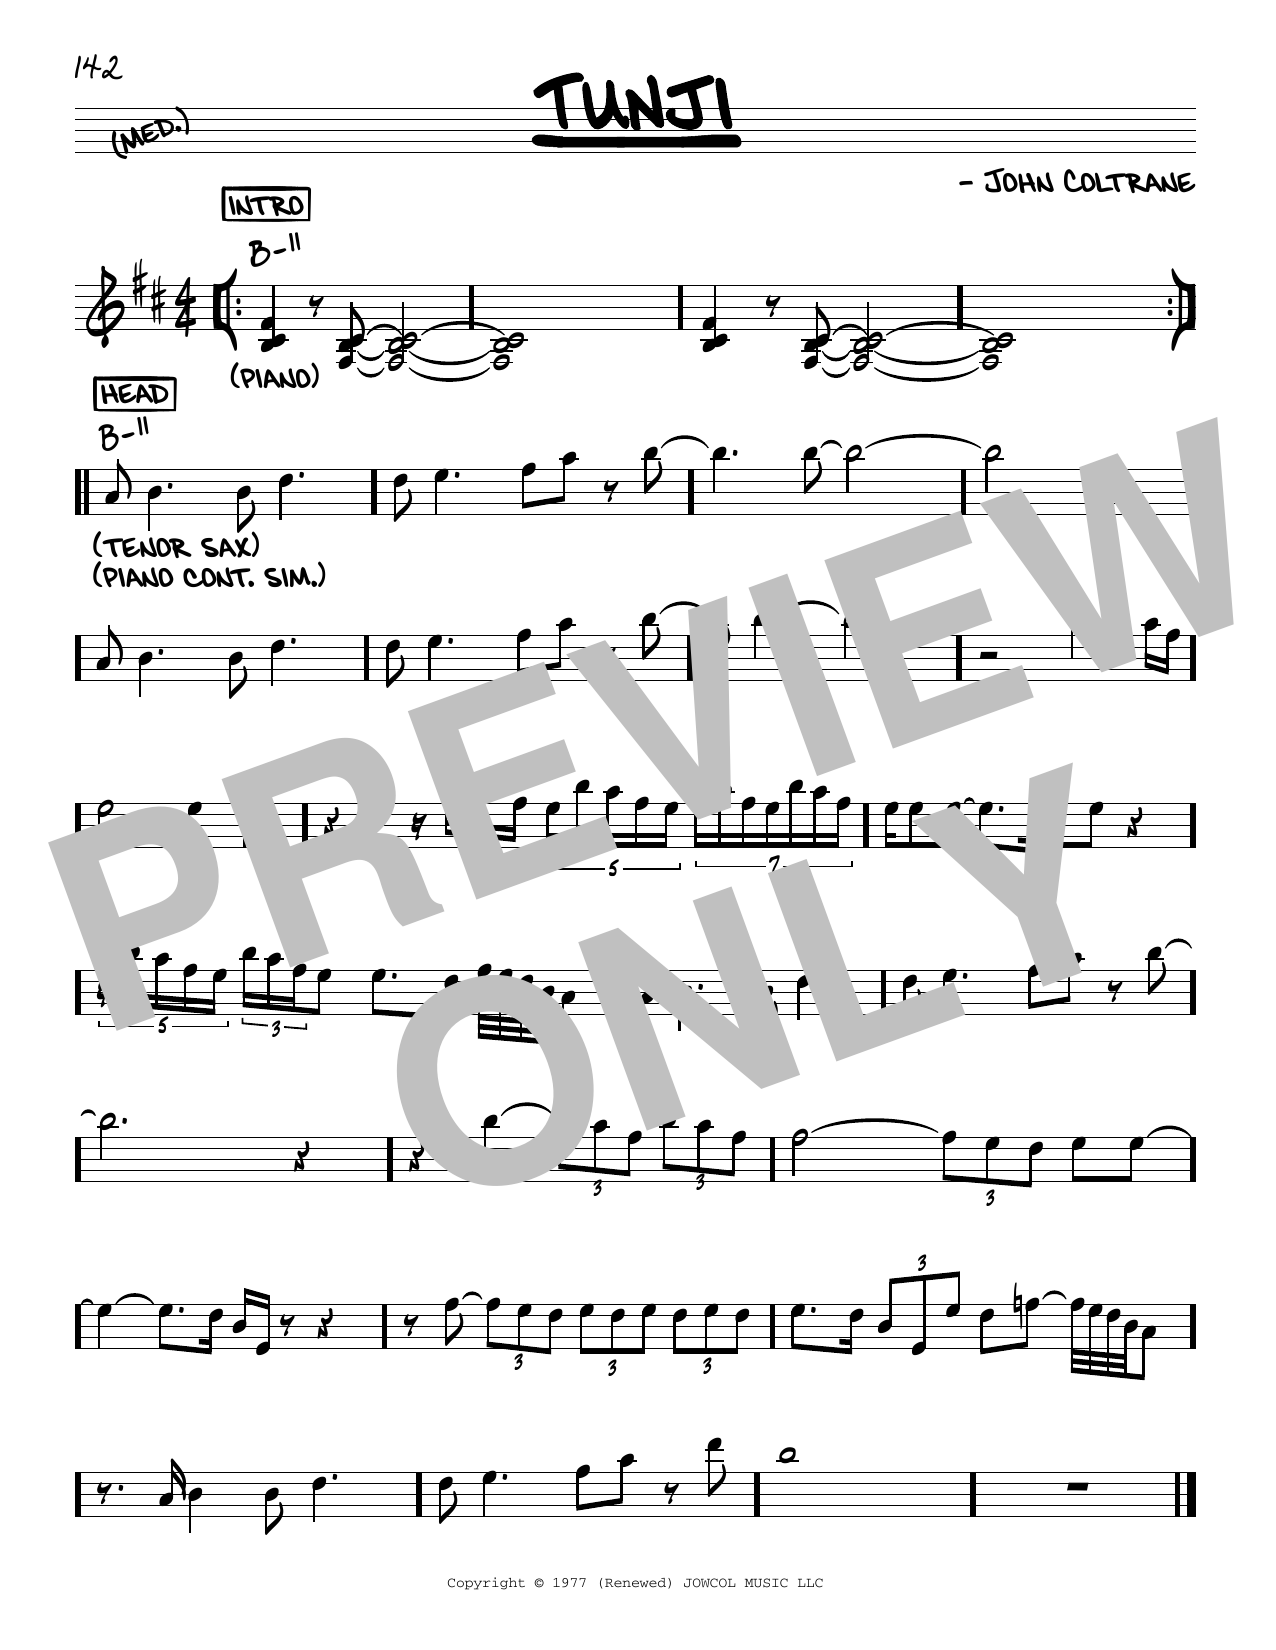 John Coltrane Tunji Sheet Music Notes & Chords for Real Book – Melody & Chords - Download or Print PDF